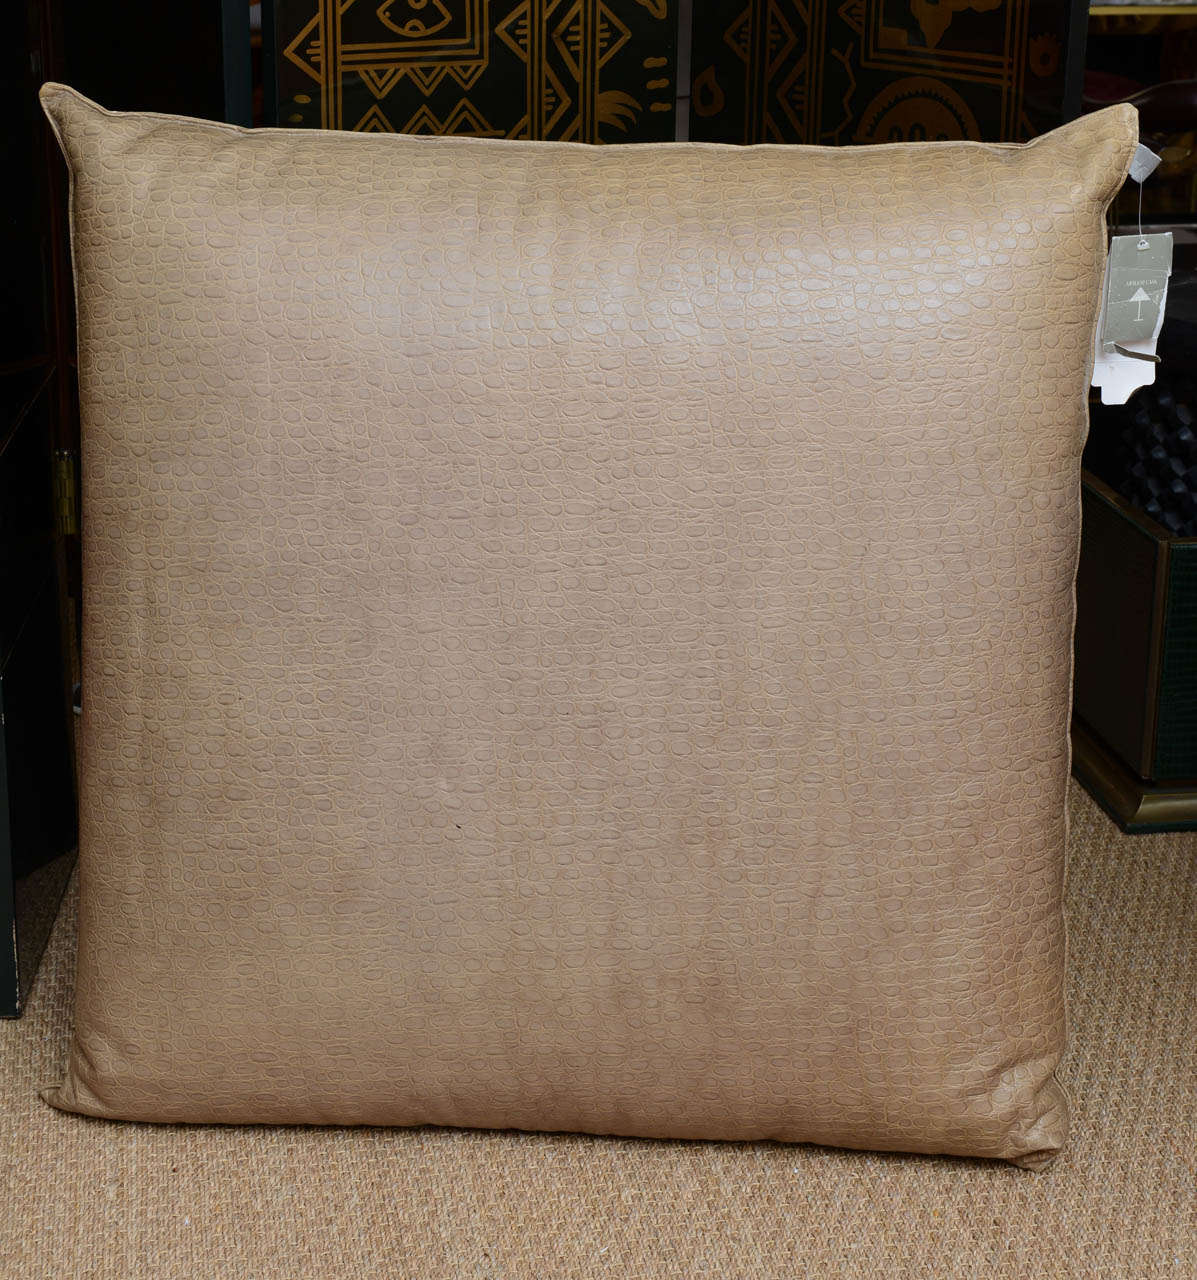 Huge Armani Casa pillow in alligator print leather.